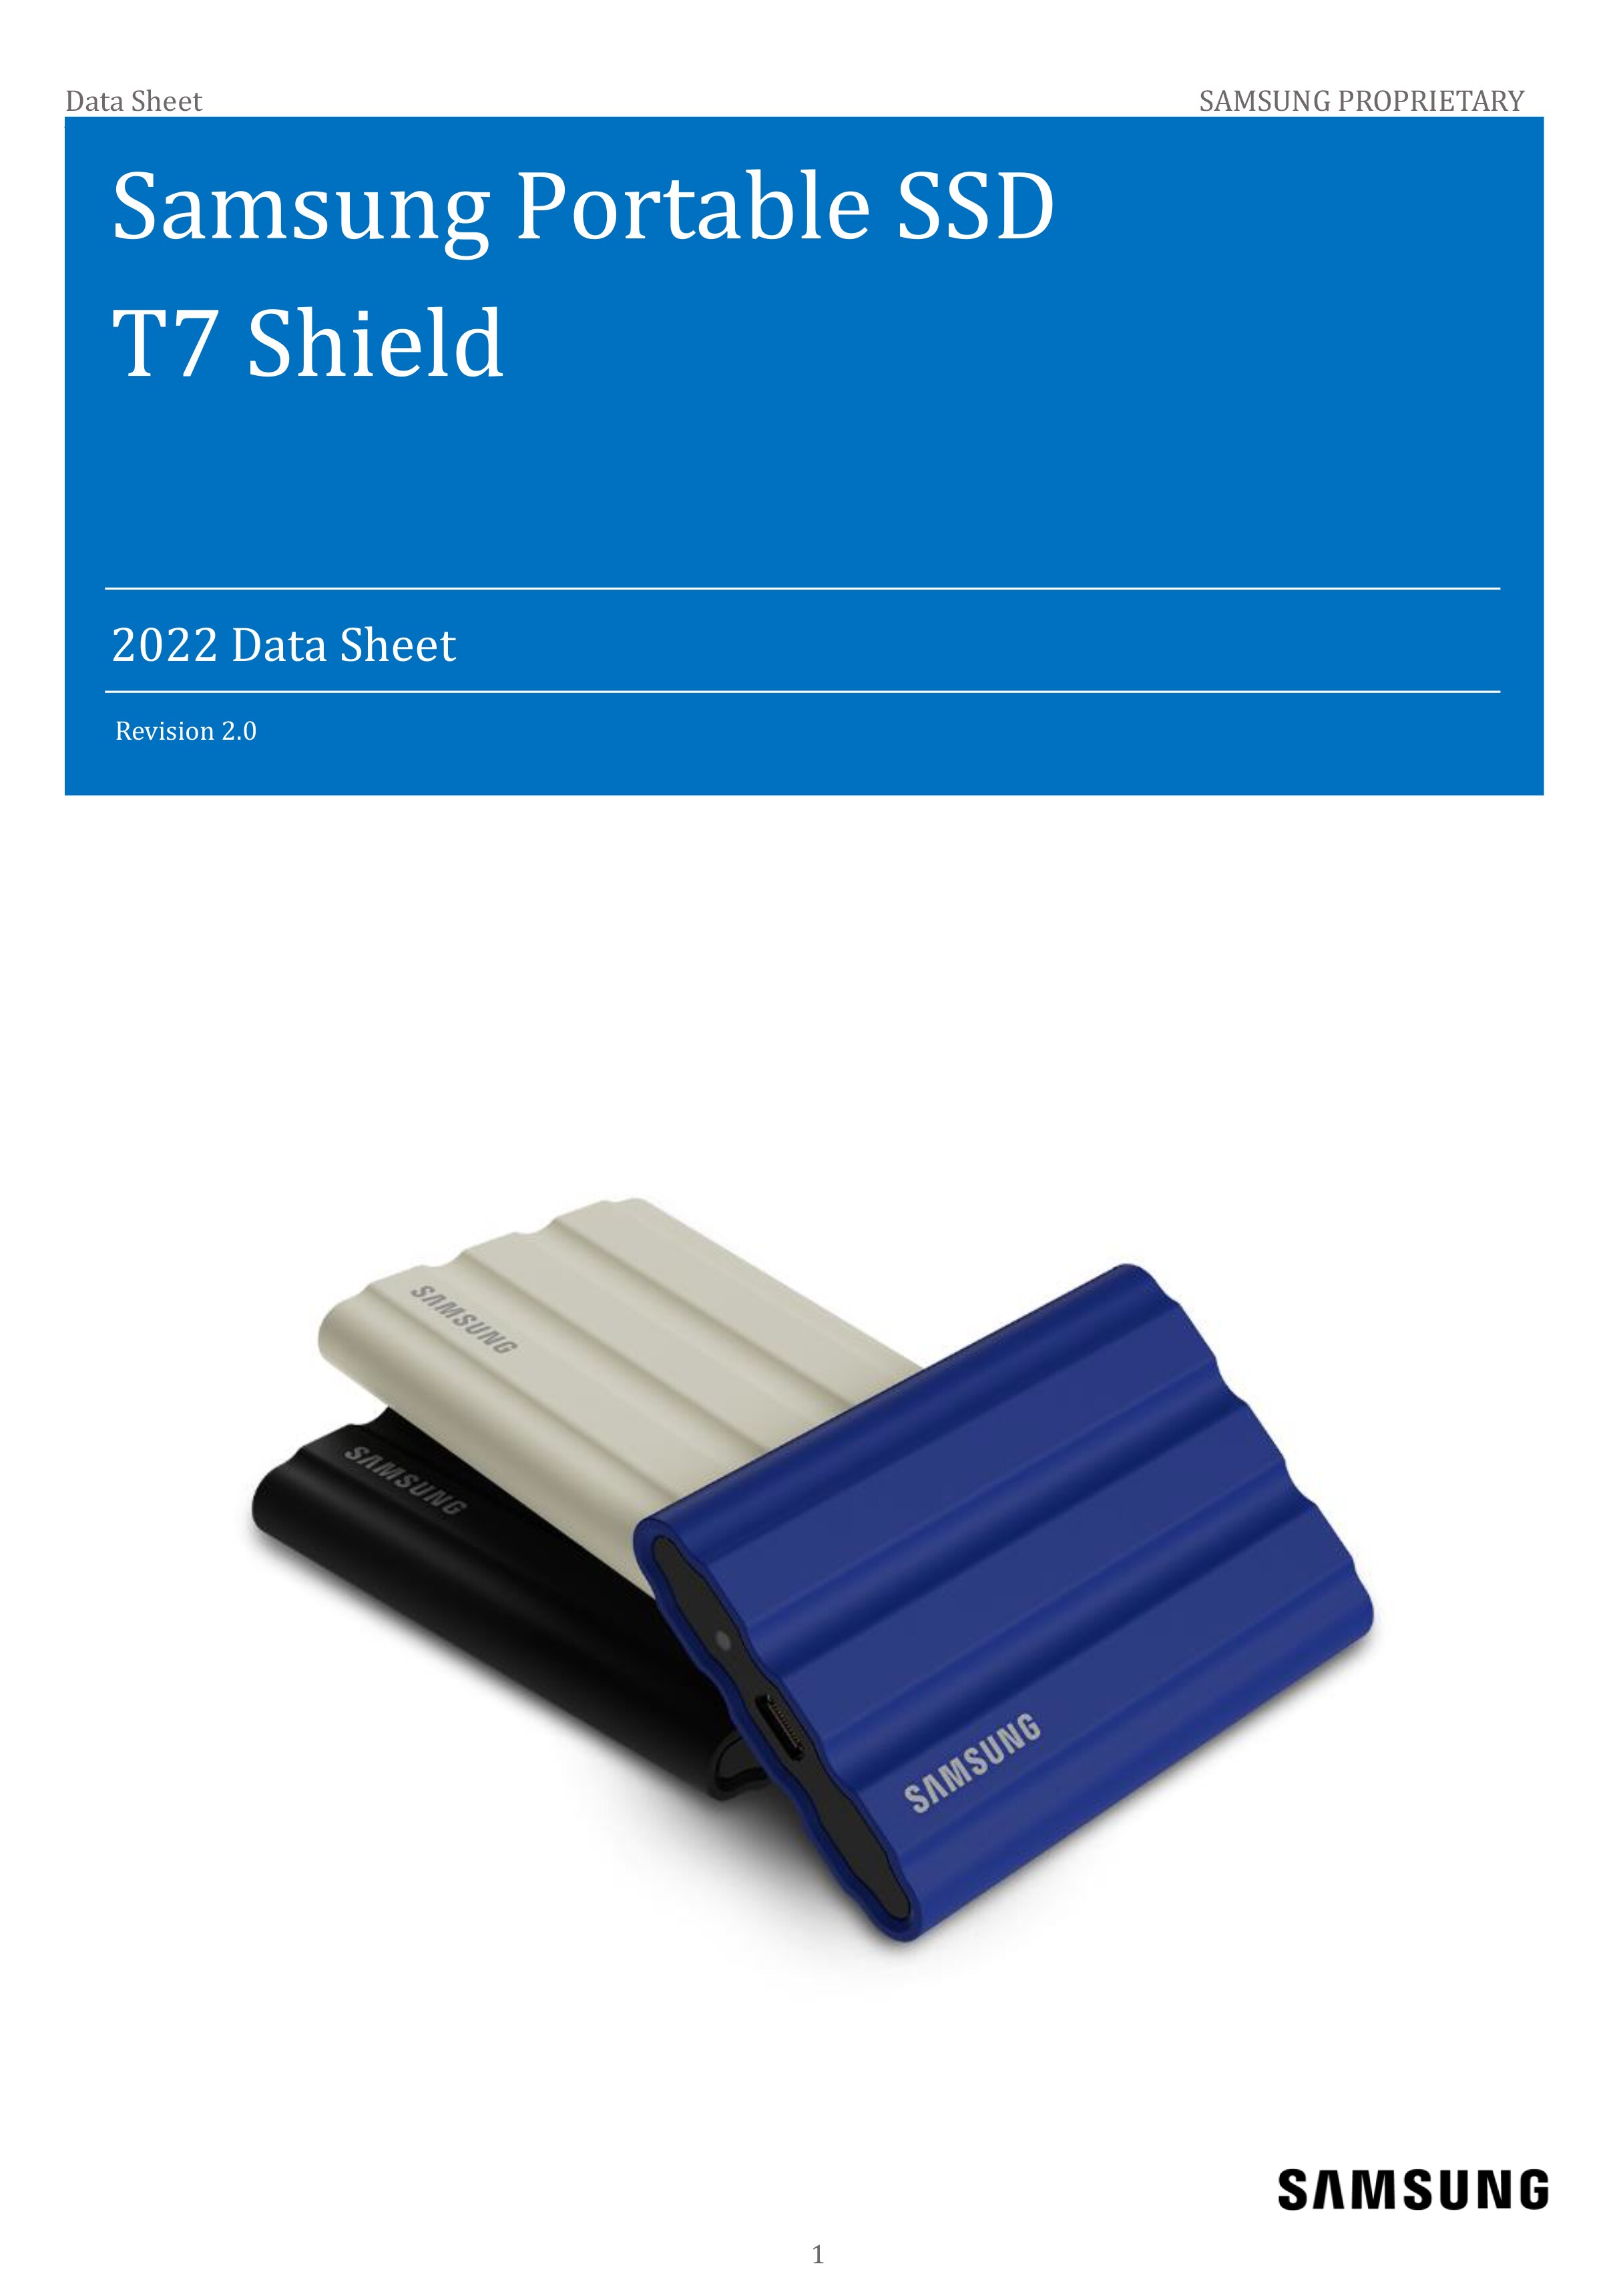 Samsung T7 Shield Portable SSD | Samsung Semiconductor Global